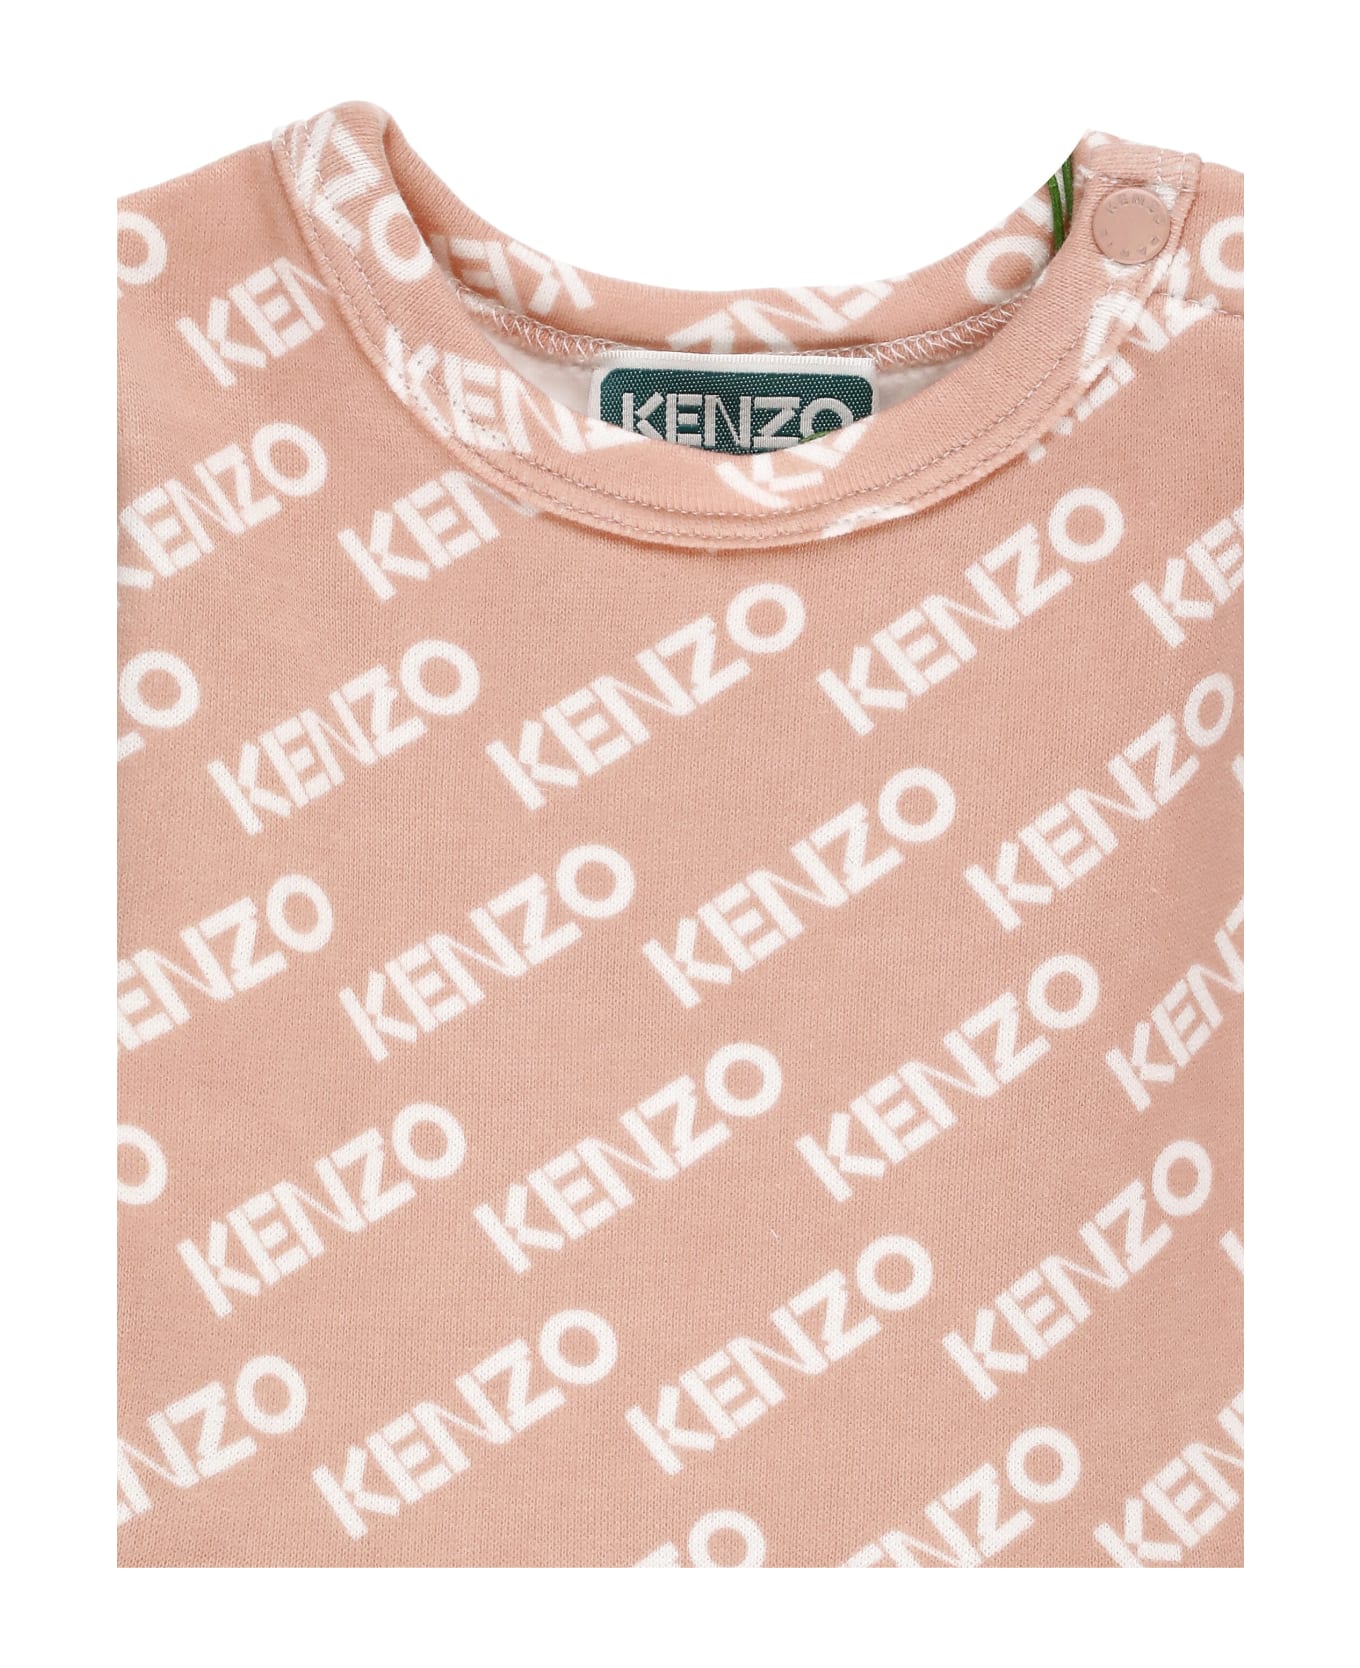 Kenzo Kids Cotton Dress - Pink